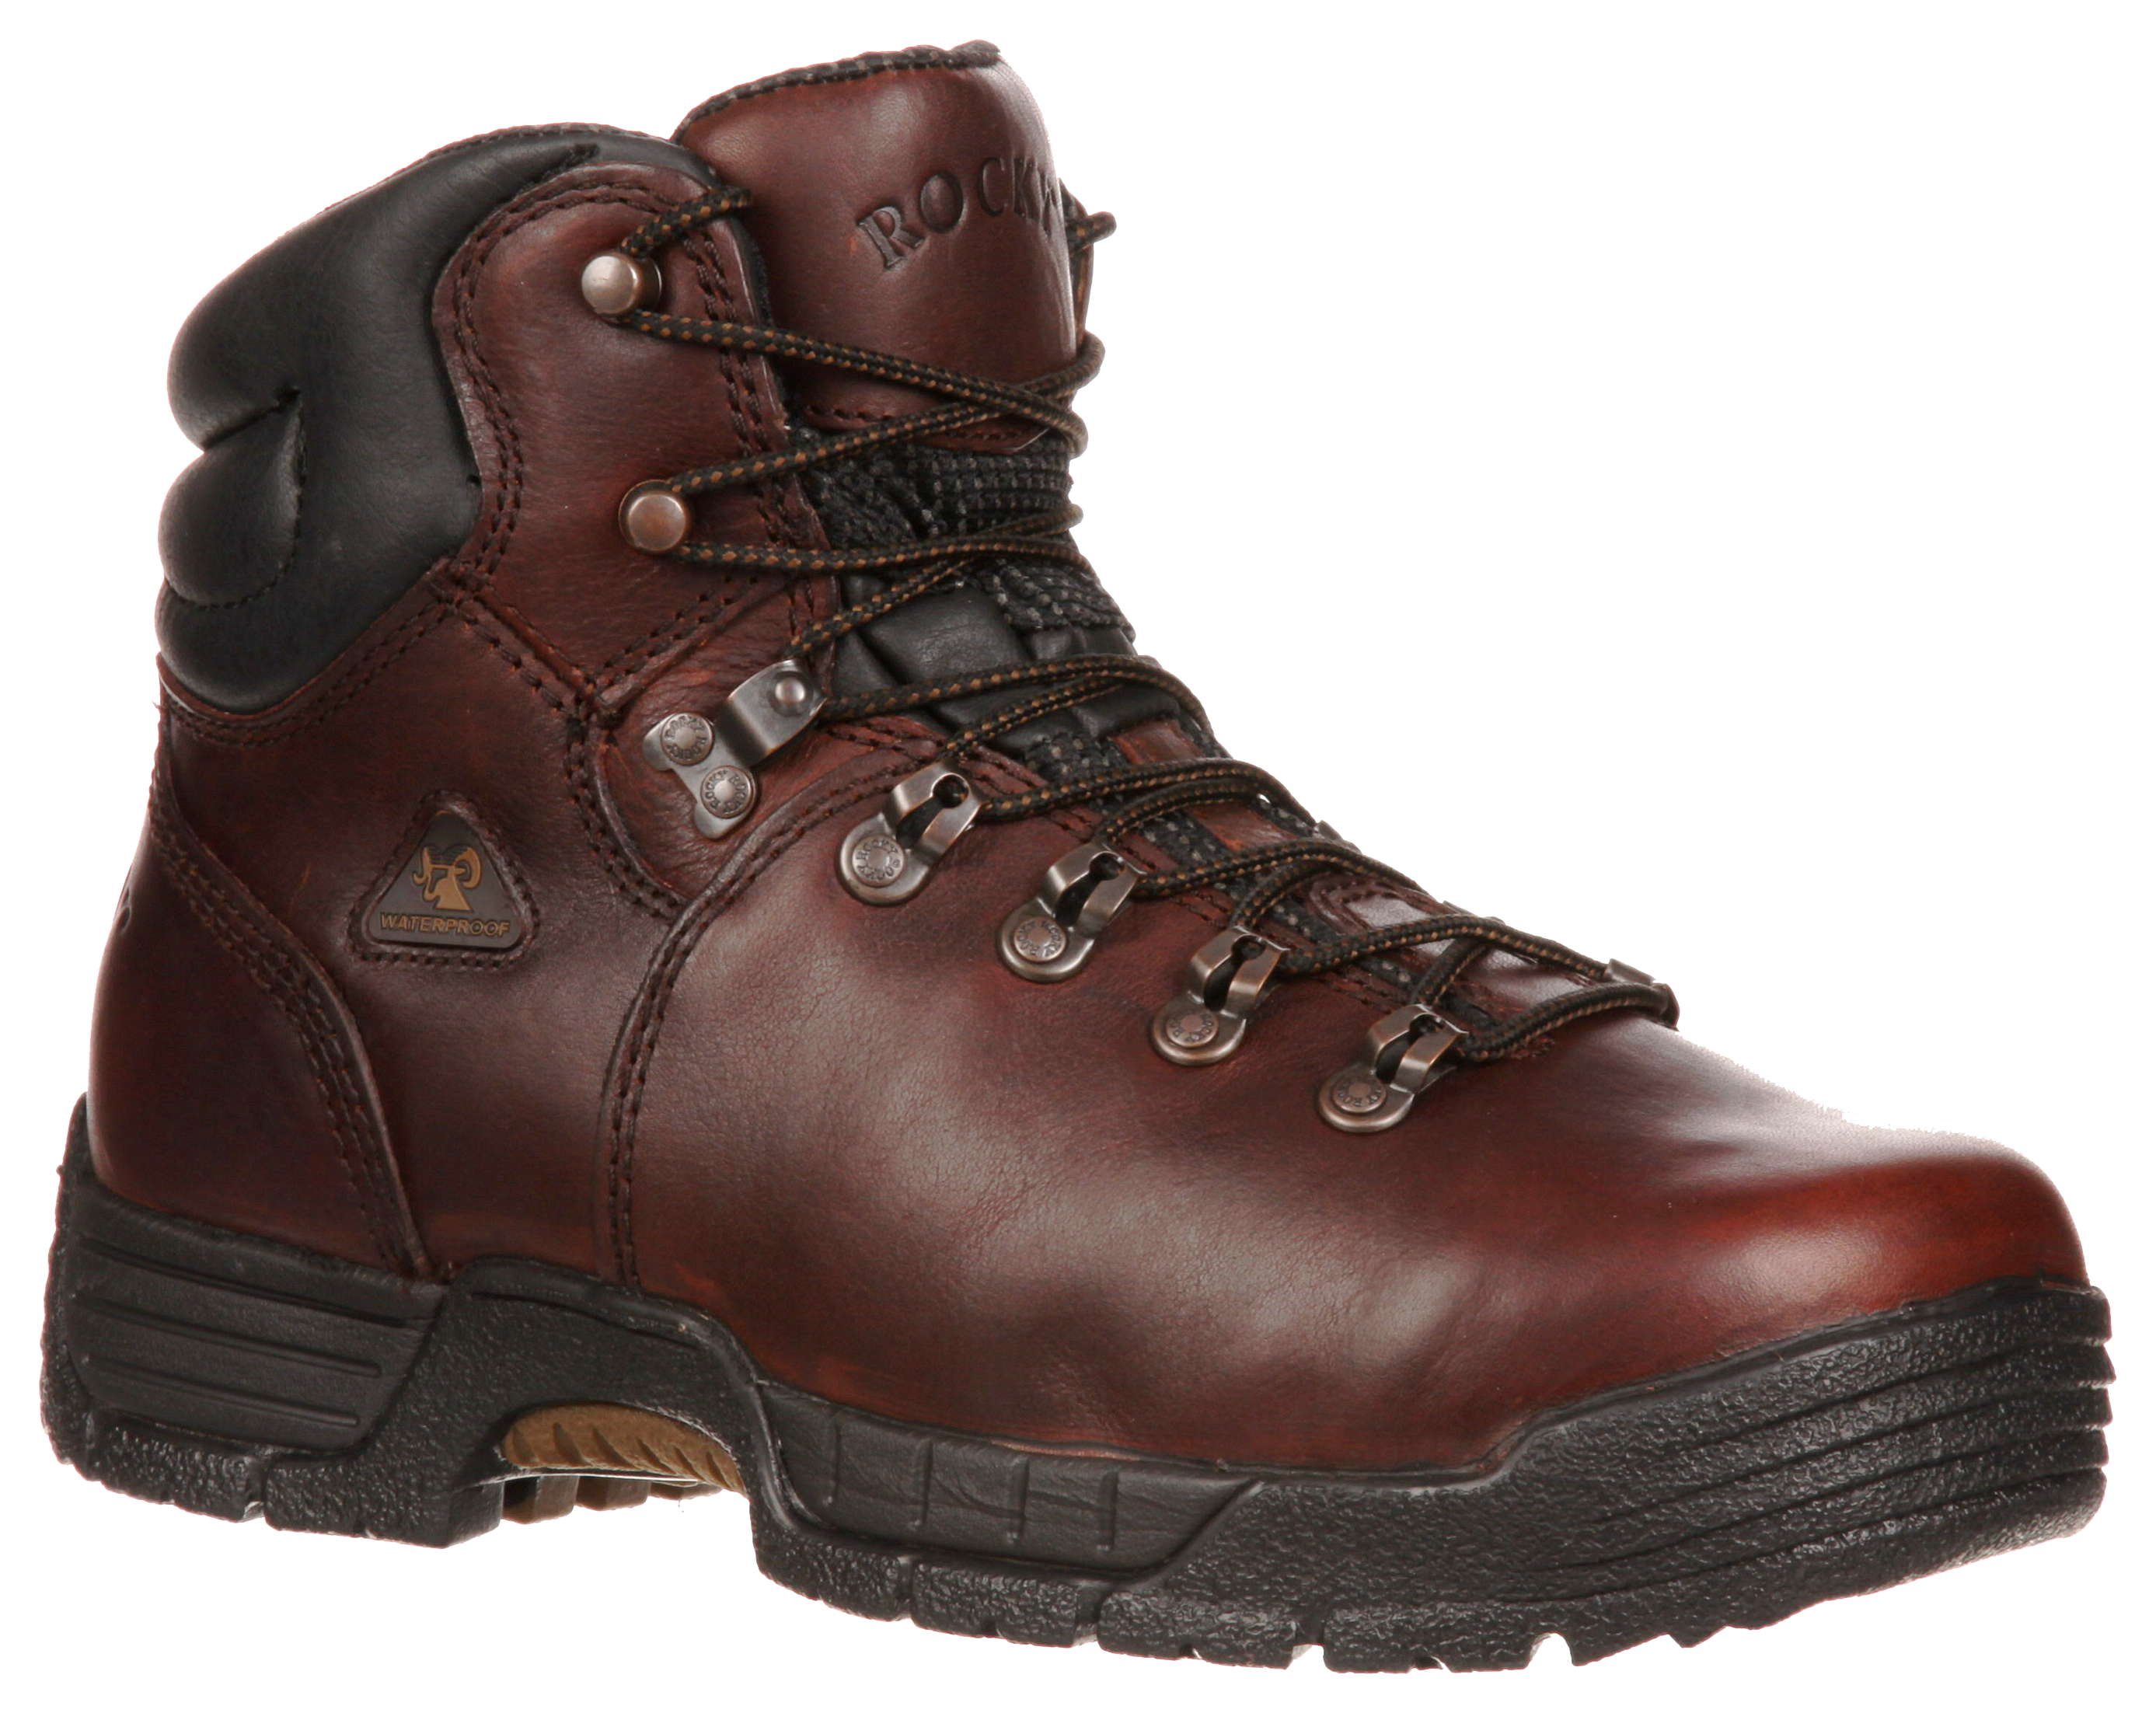 ROCKY MobiLite Waterproof Steel Toe Work Boots for Men - Brown - 10.5 W